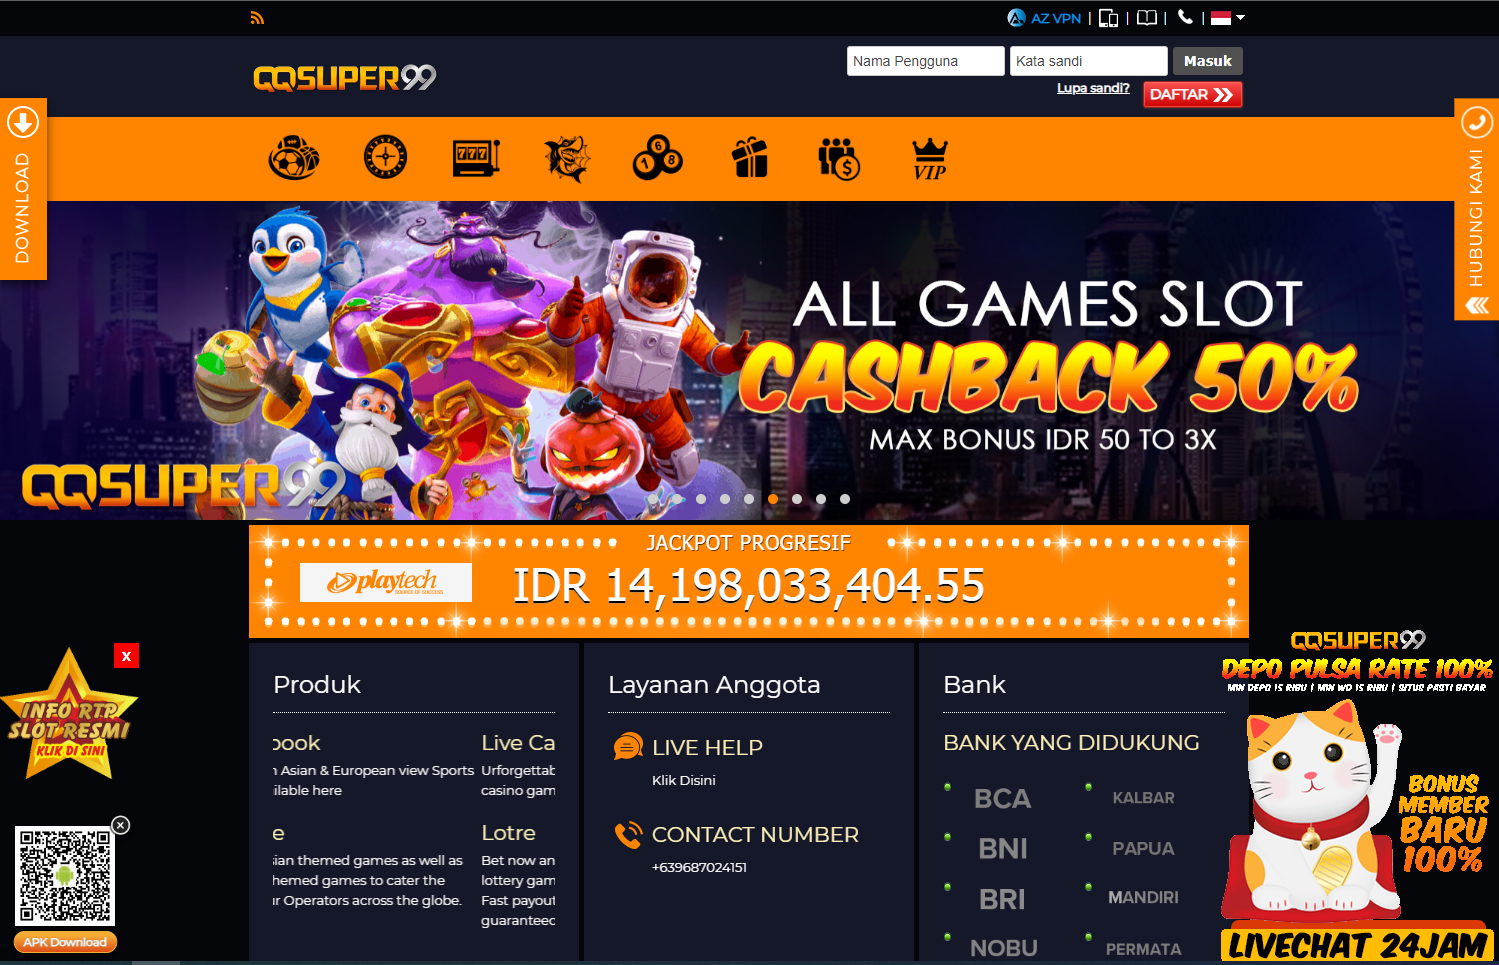 QQSUPER99 Slot Judi Online Gacor Deposit Pulsa Tanpa Potongan 100%